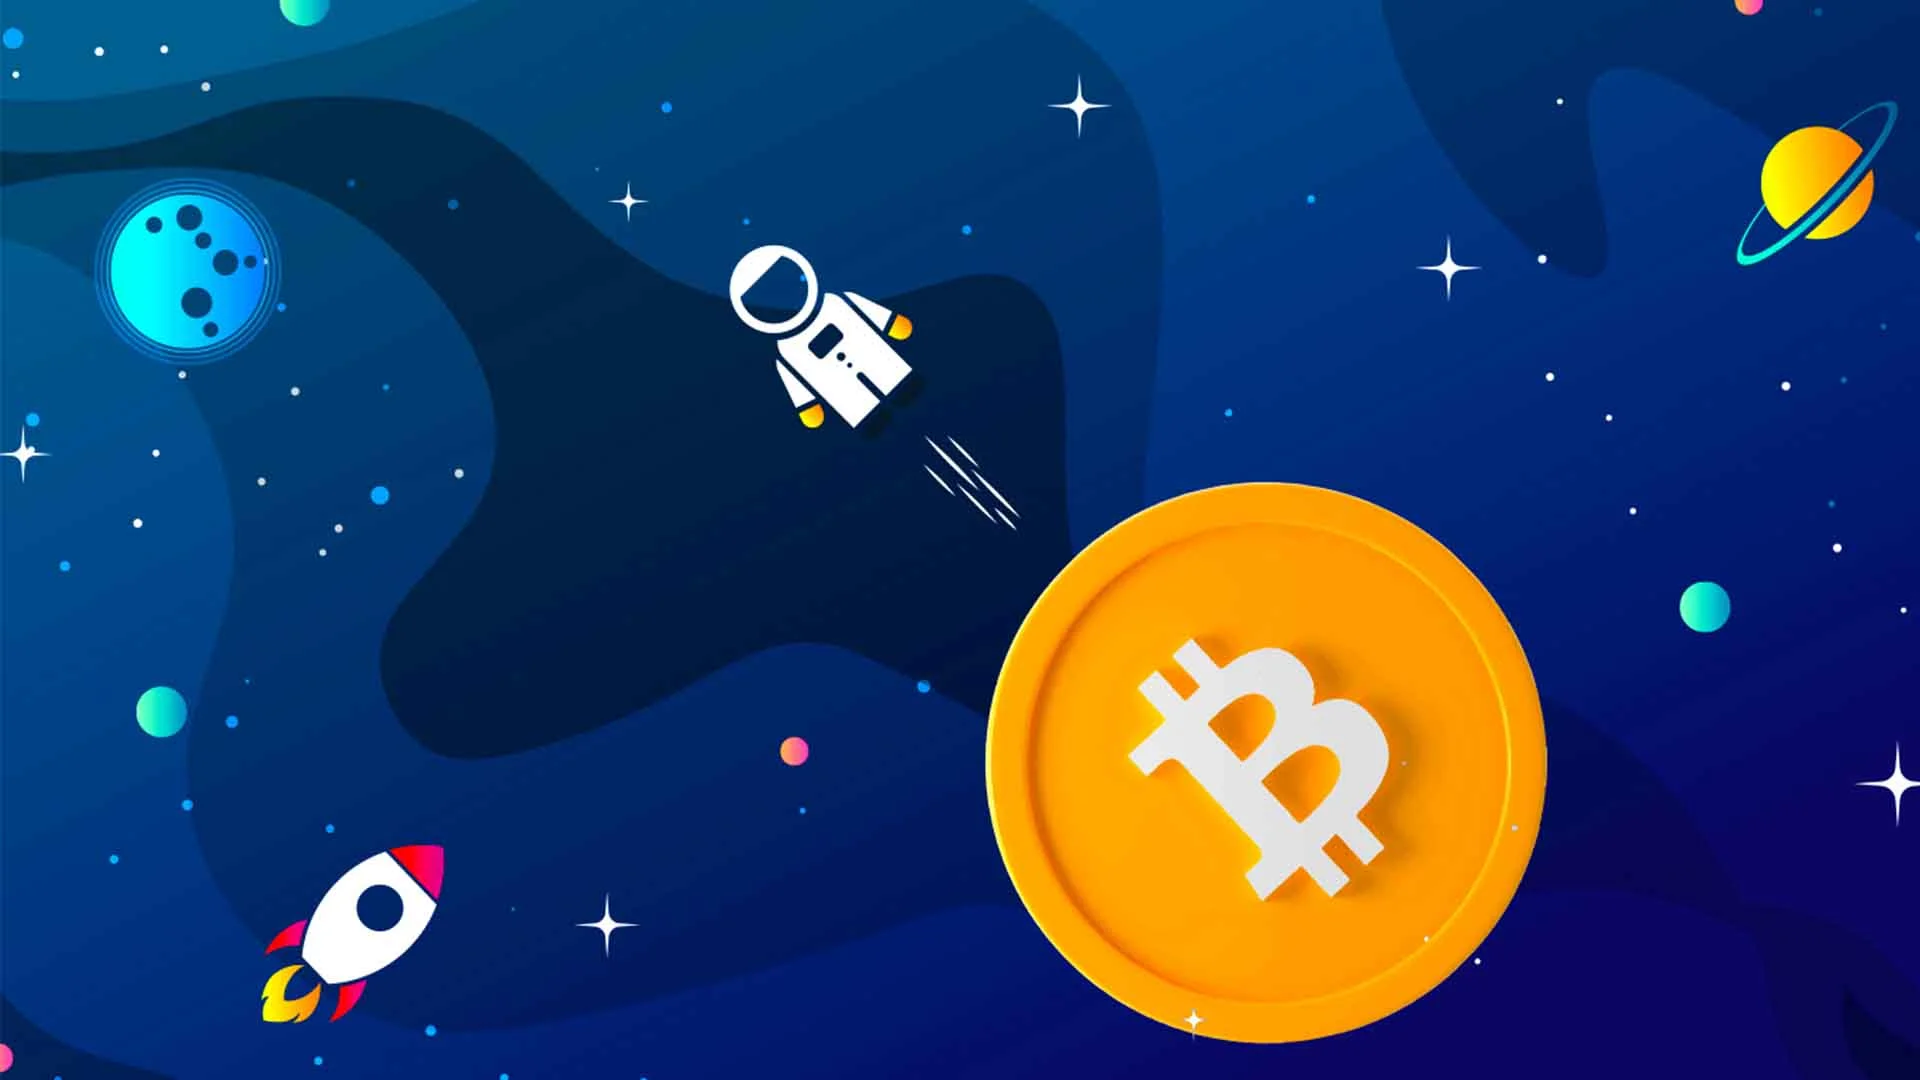 Moon Bitcoin Review: Is Moon Bitcoin a Scam?